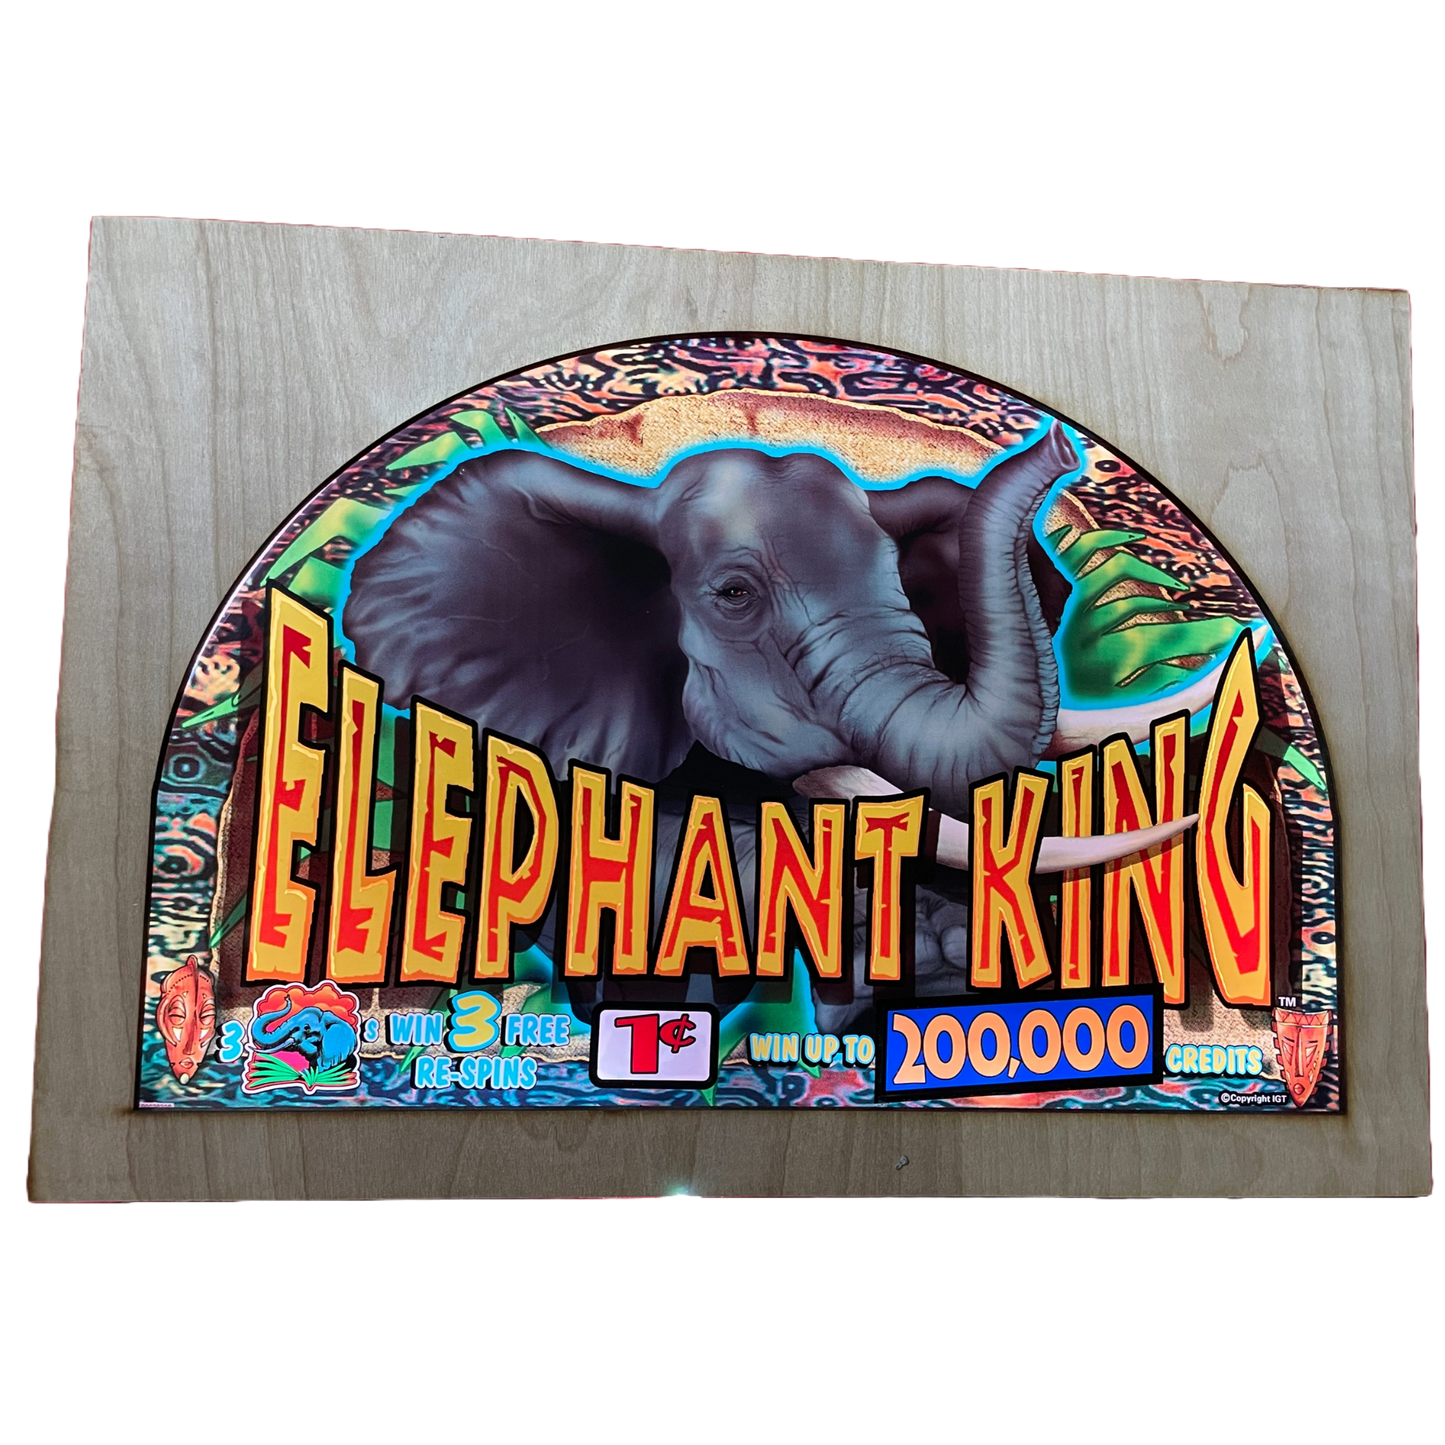 Elephant King Slot Glass